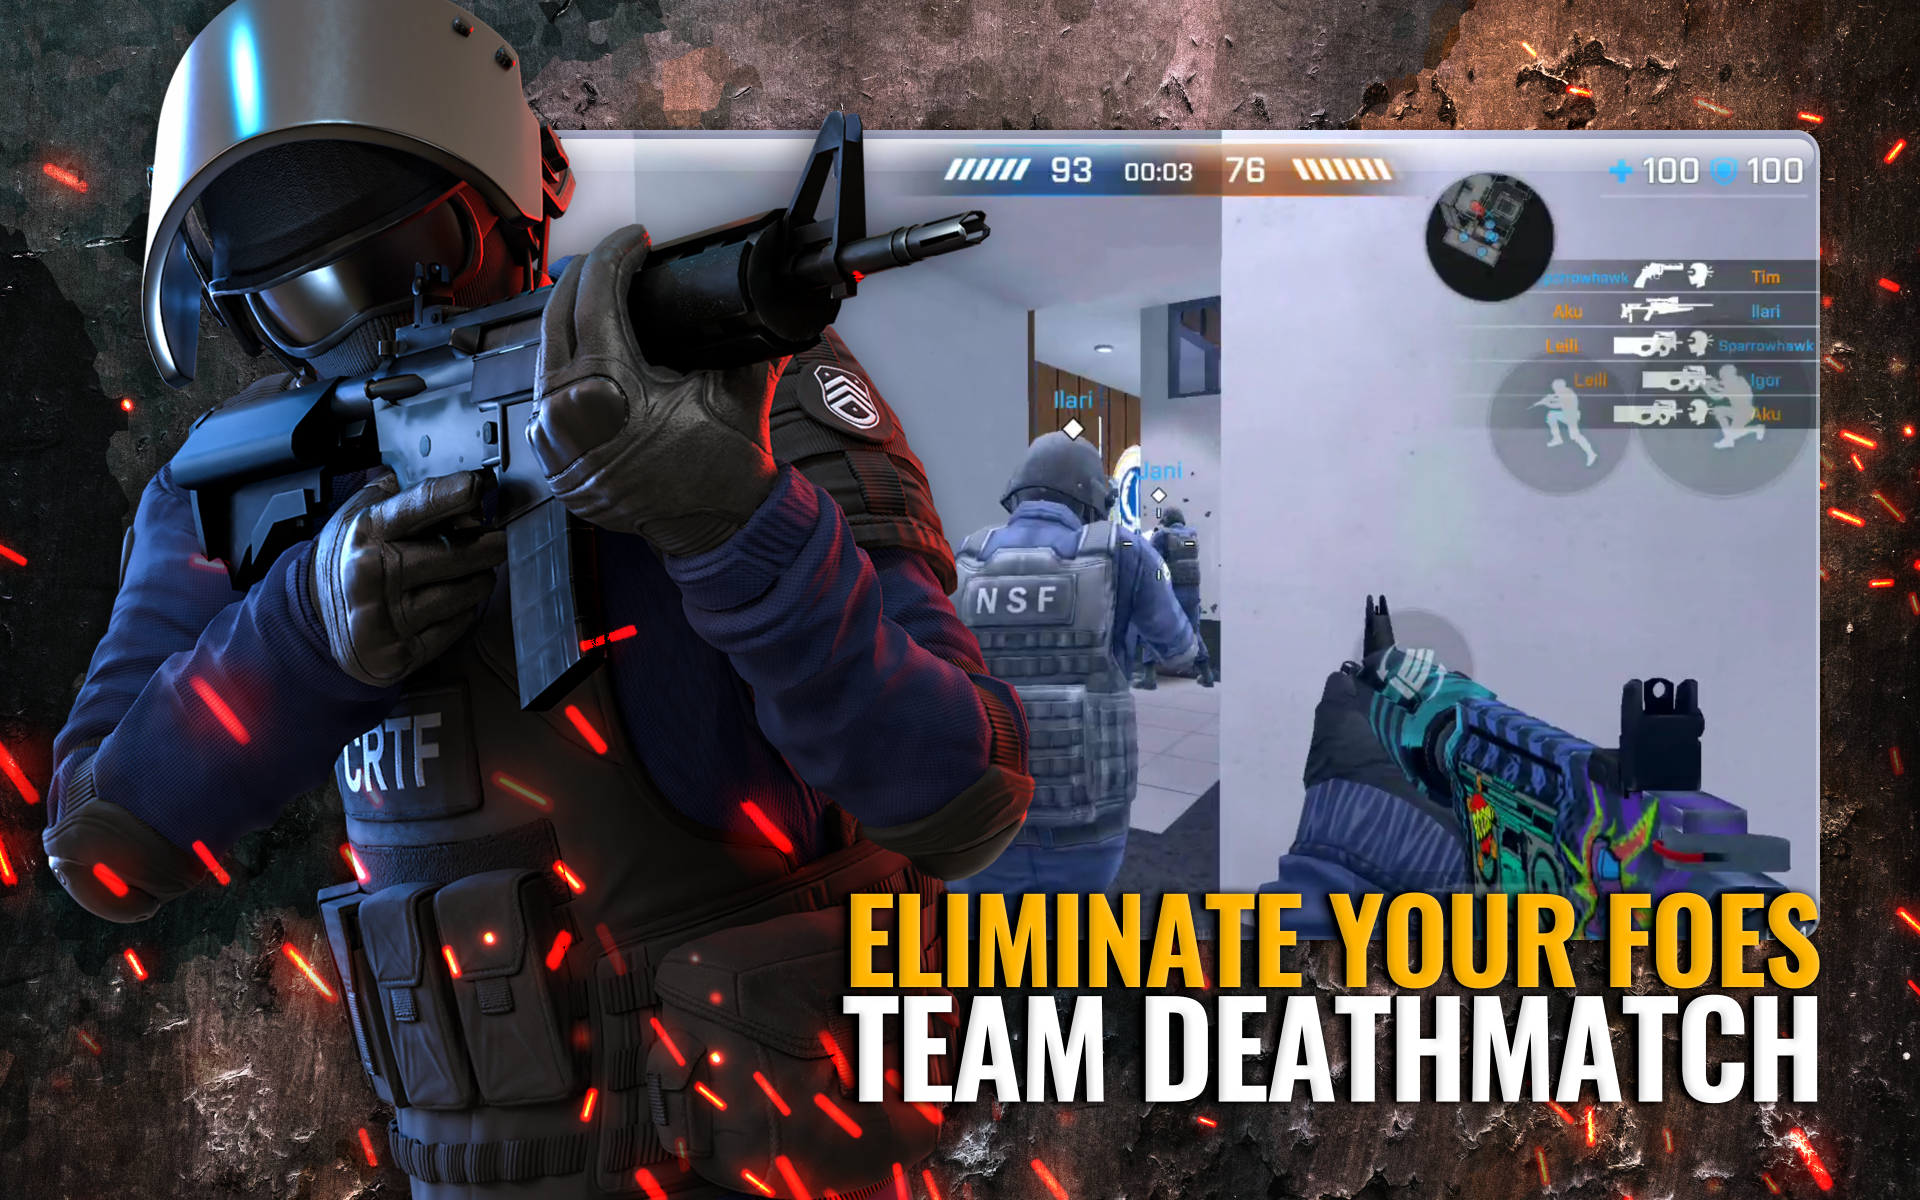 Critical Strike - Team Deathmatch Gameplay [1080p/60fps] 